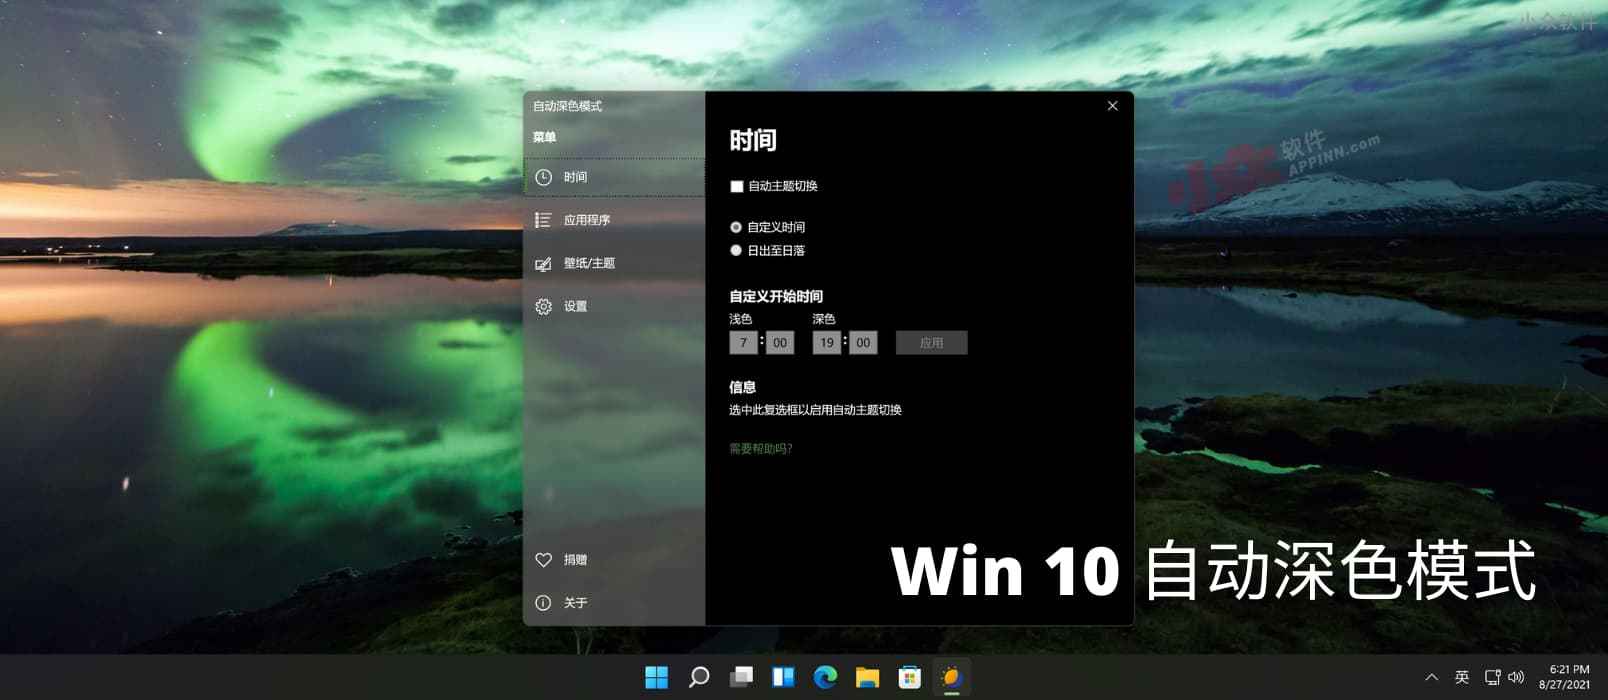 Windows 10 Auto Dark Mode – Win10 自动深色模式